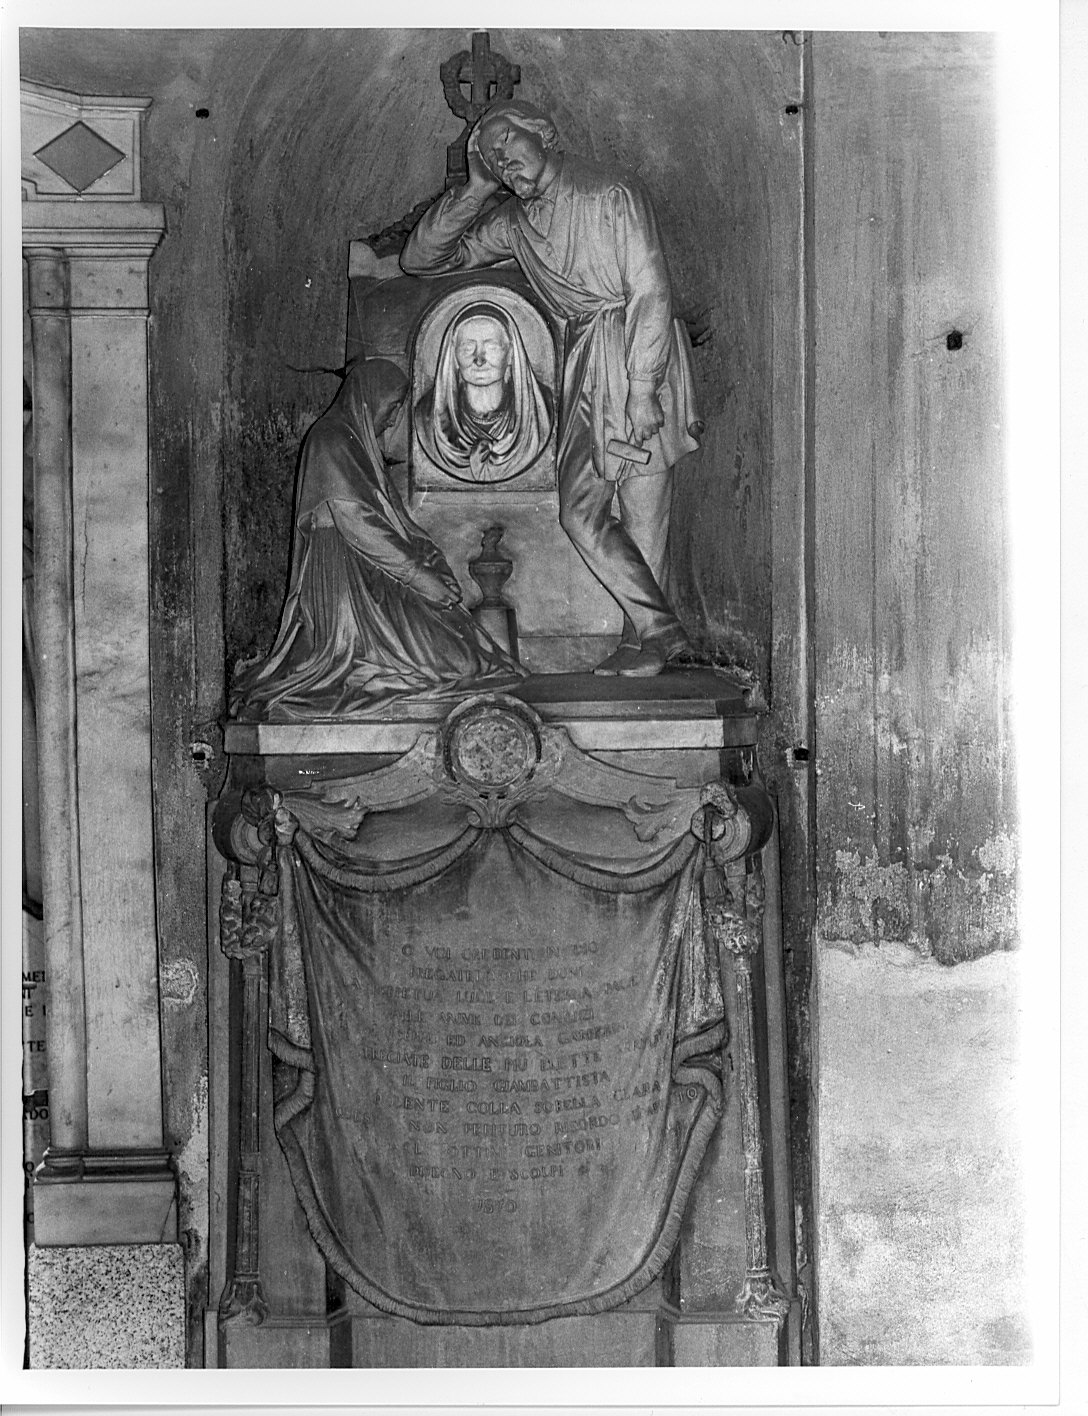 monumento sepolcrale di Giuseppe e Angiola Garberini (monumento funebre) di Garberini Giovan Battista (sec. XIX)